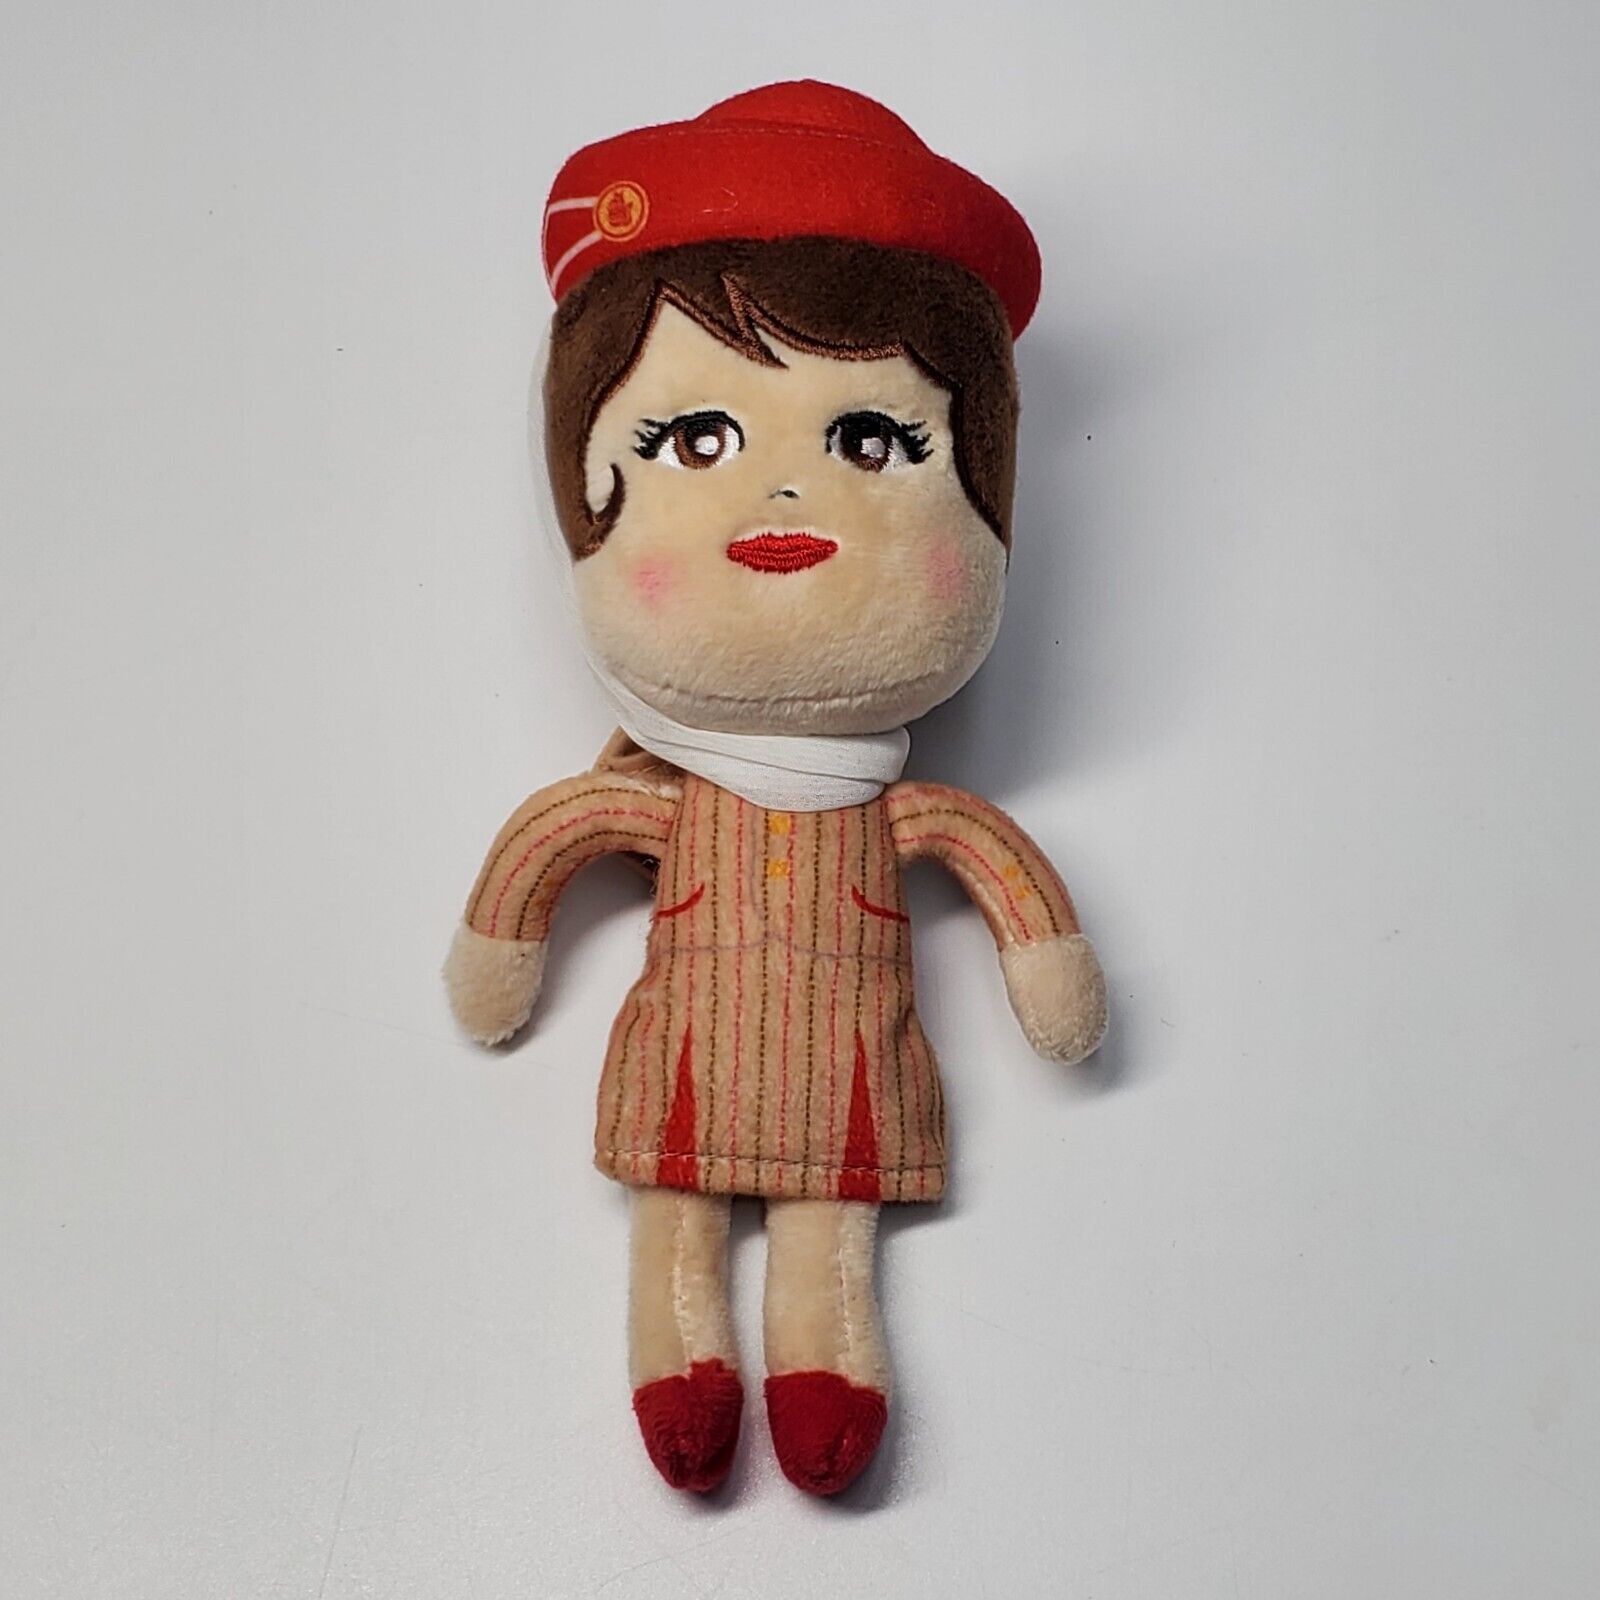 Emirates Little Travelers Cabin Crew Rag Doll Wang Wrist Hugger Plush Stuffed